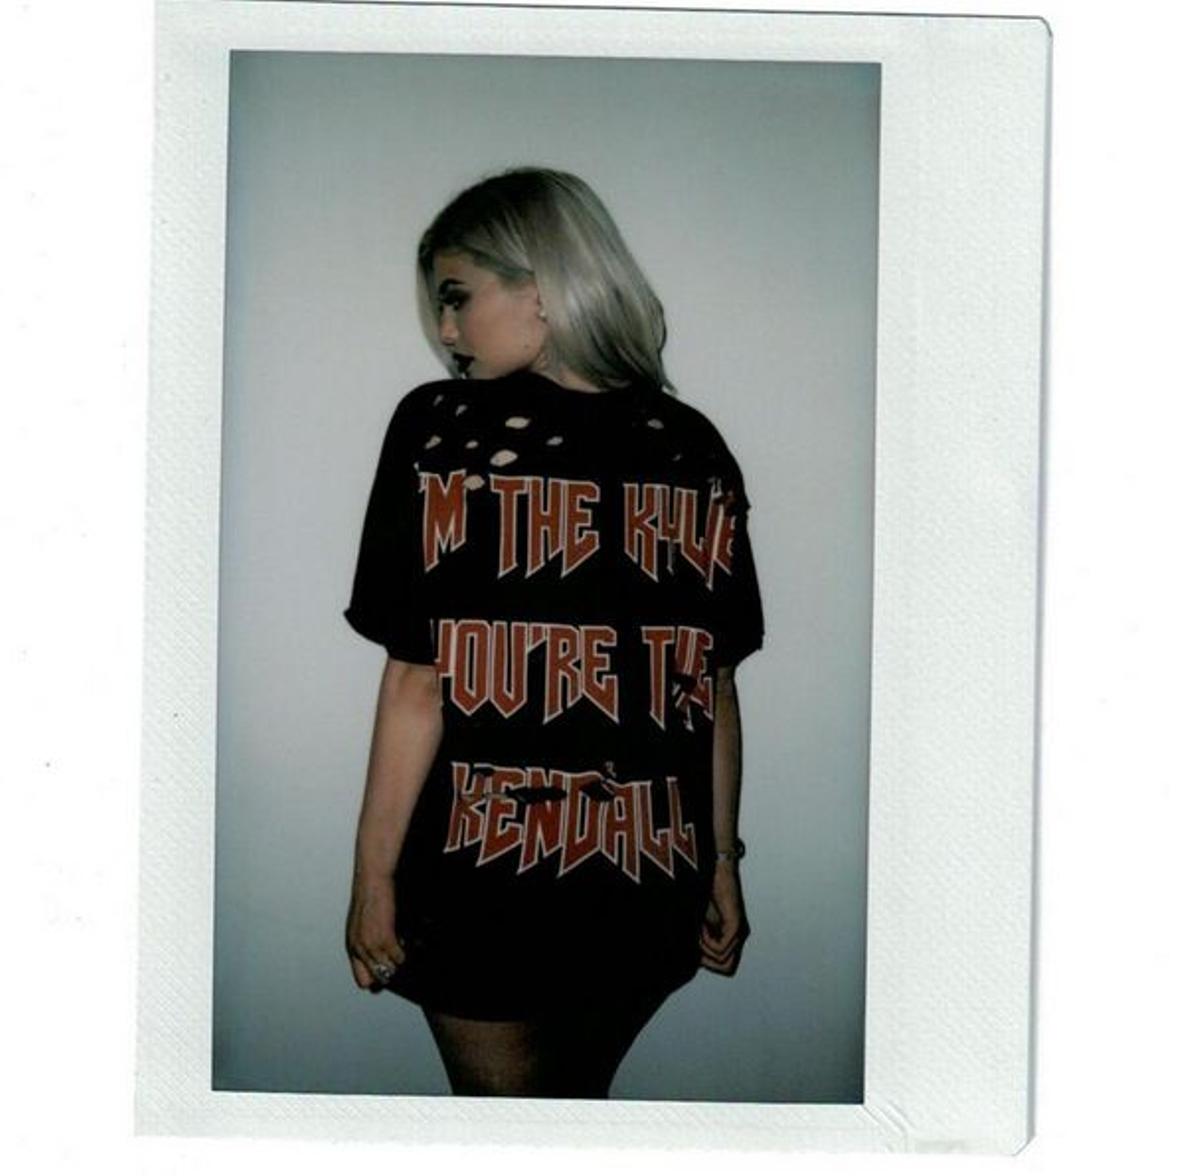 The Kylie Shop: camisetas 100% personalizadas